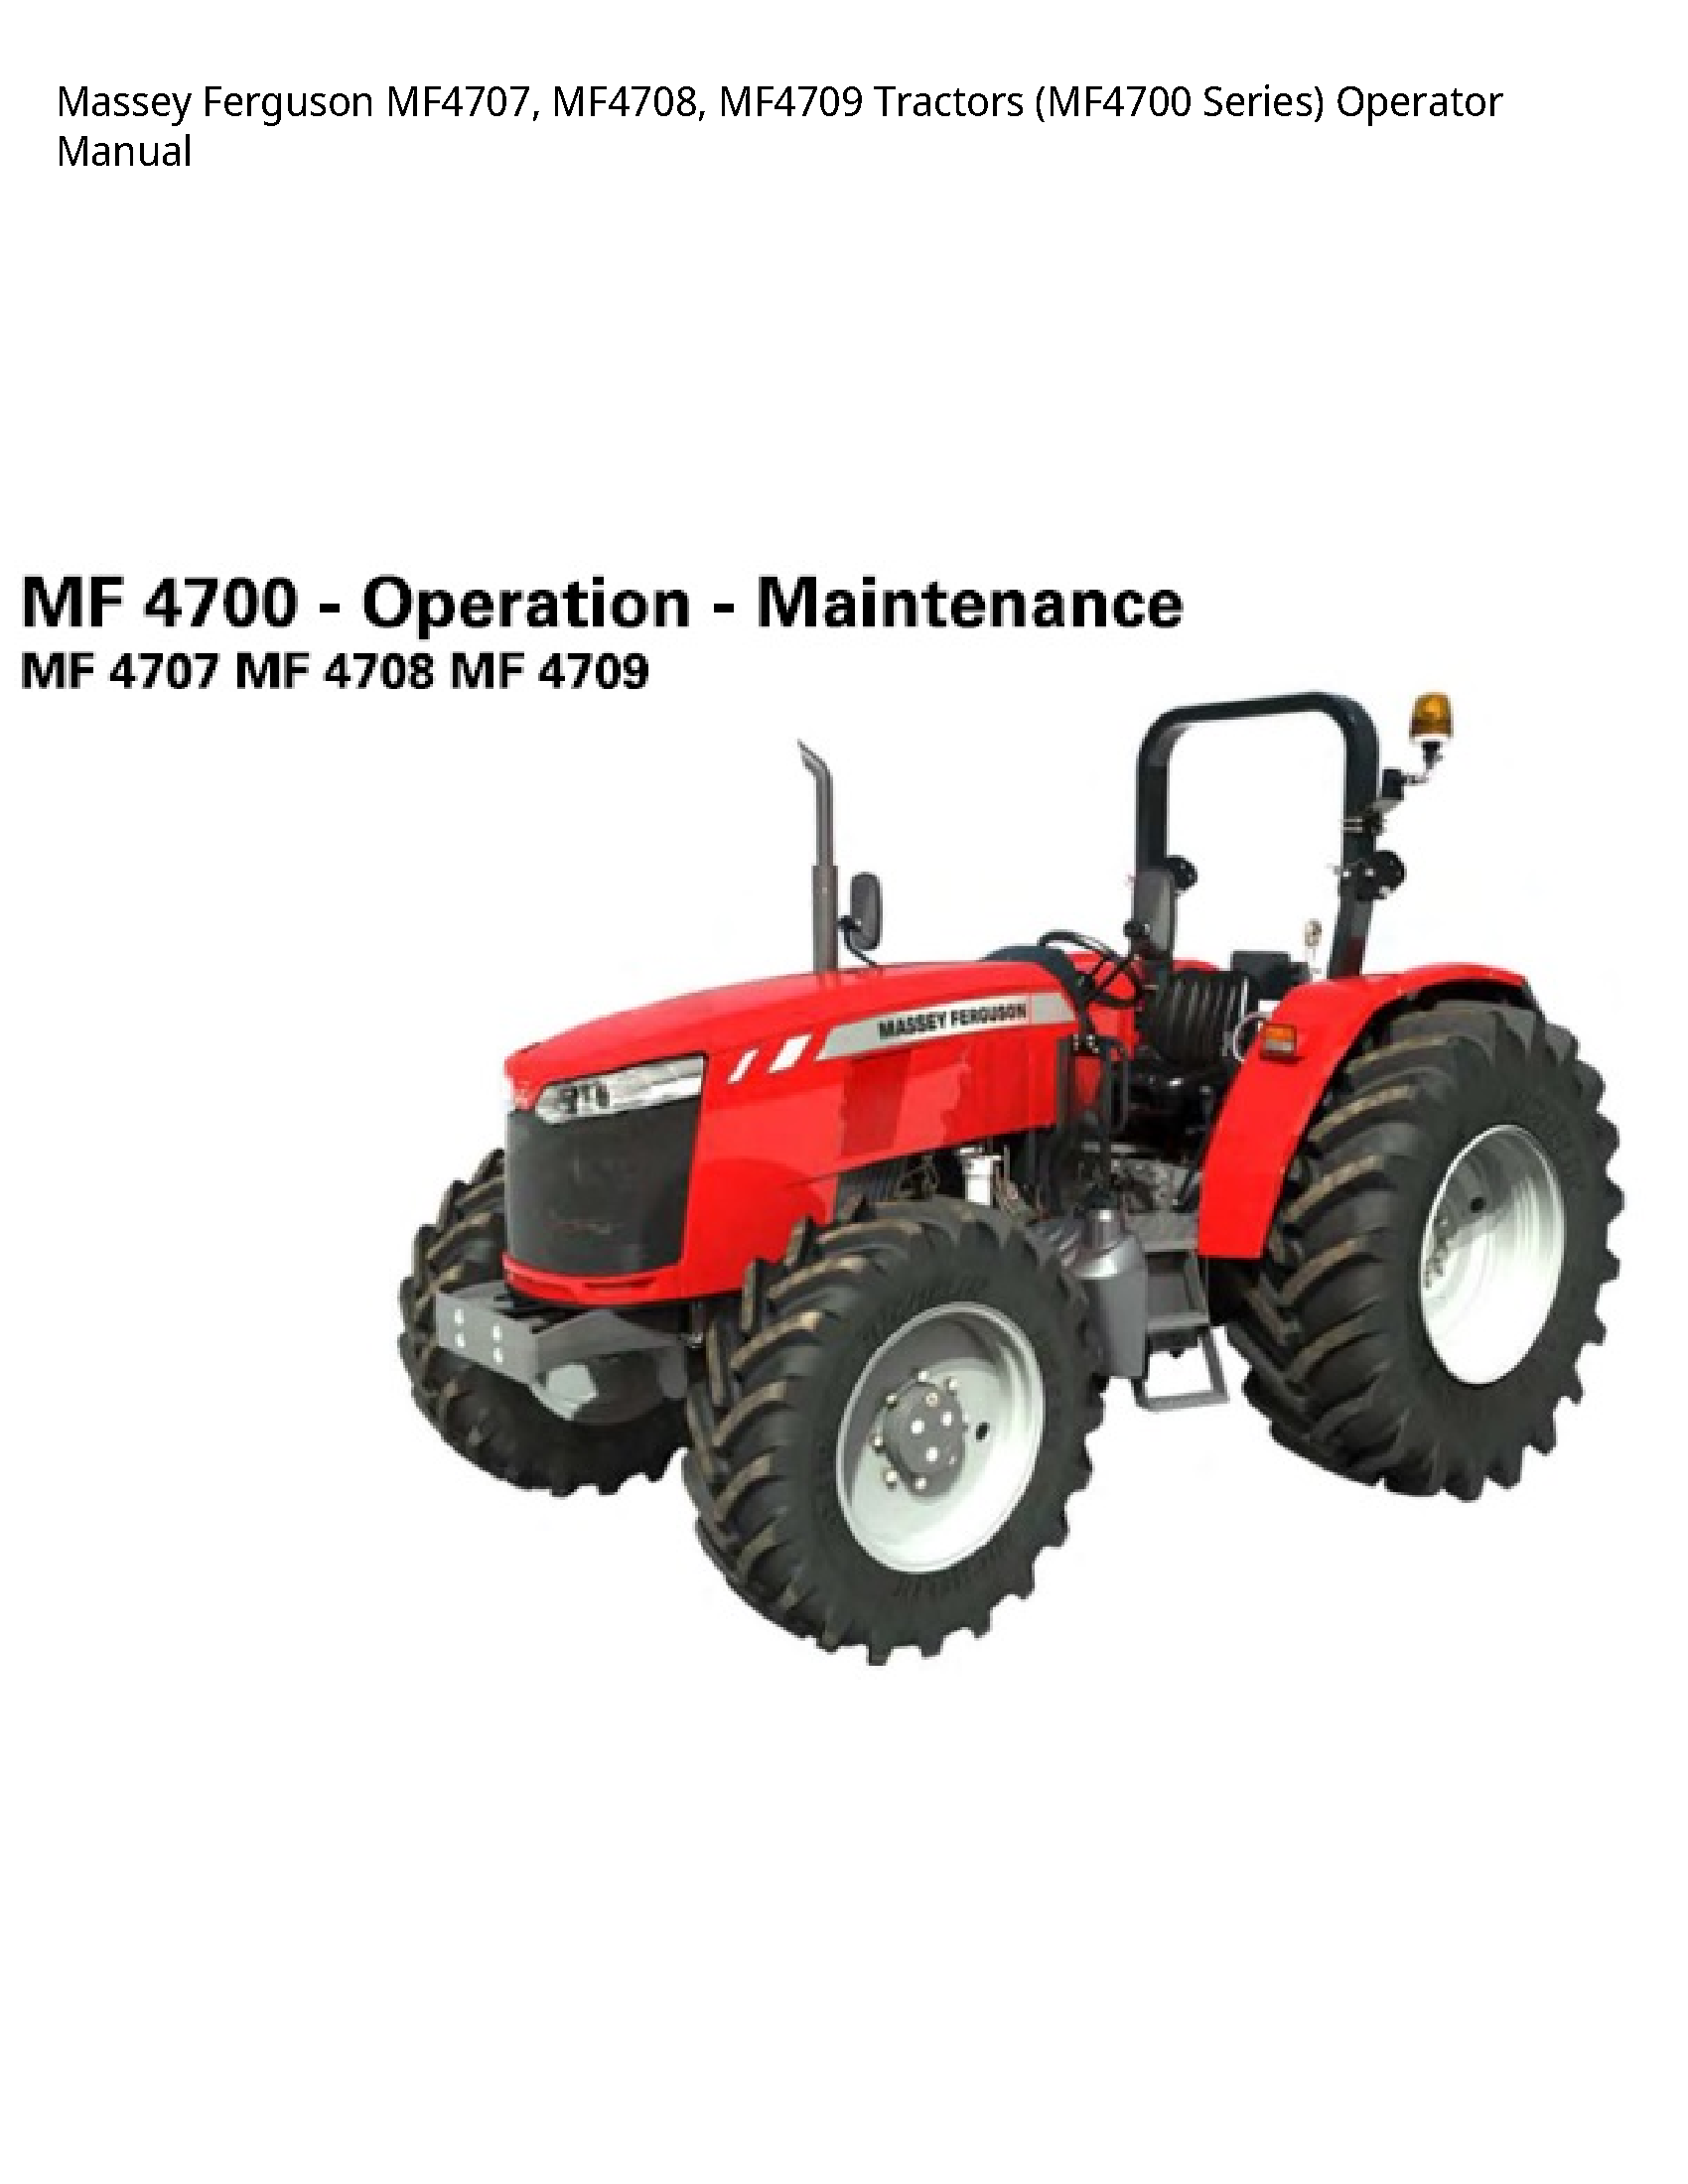 Massey Ferguson MF4707 Tractors Series) Operator manual